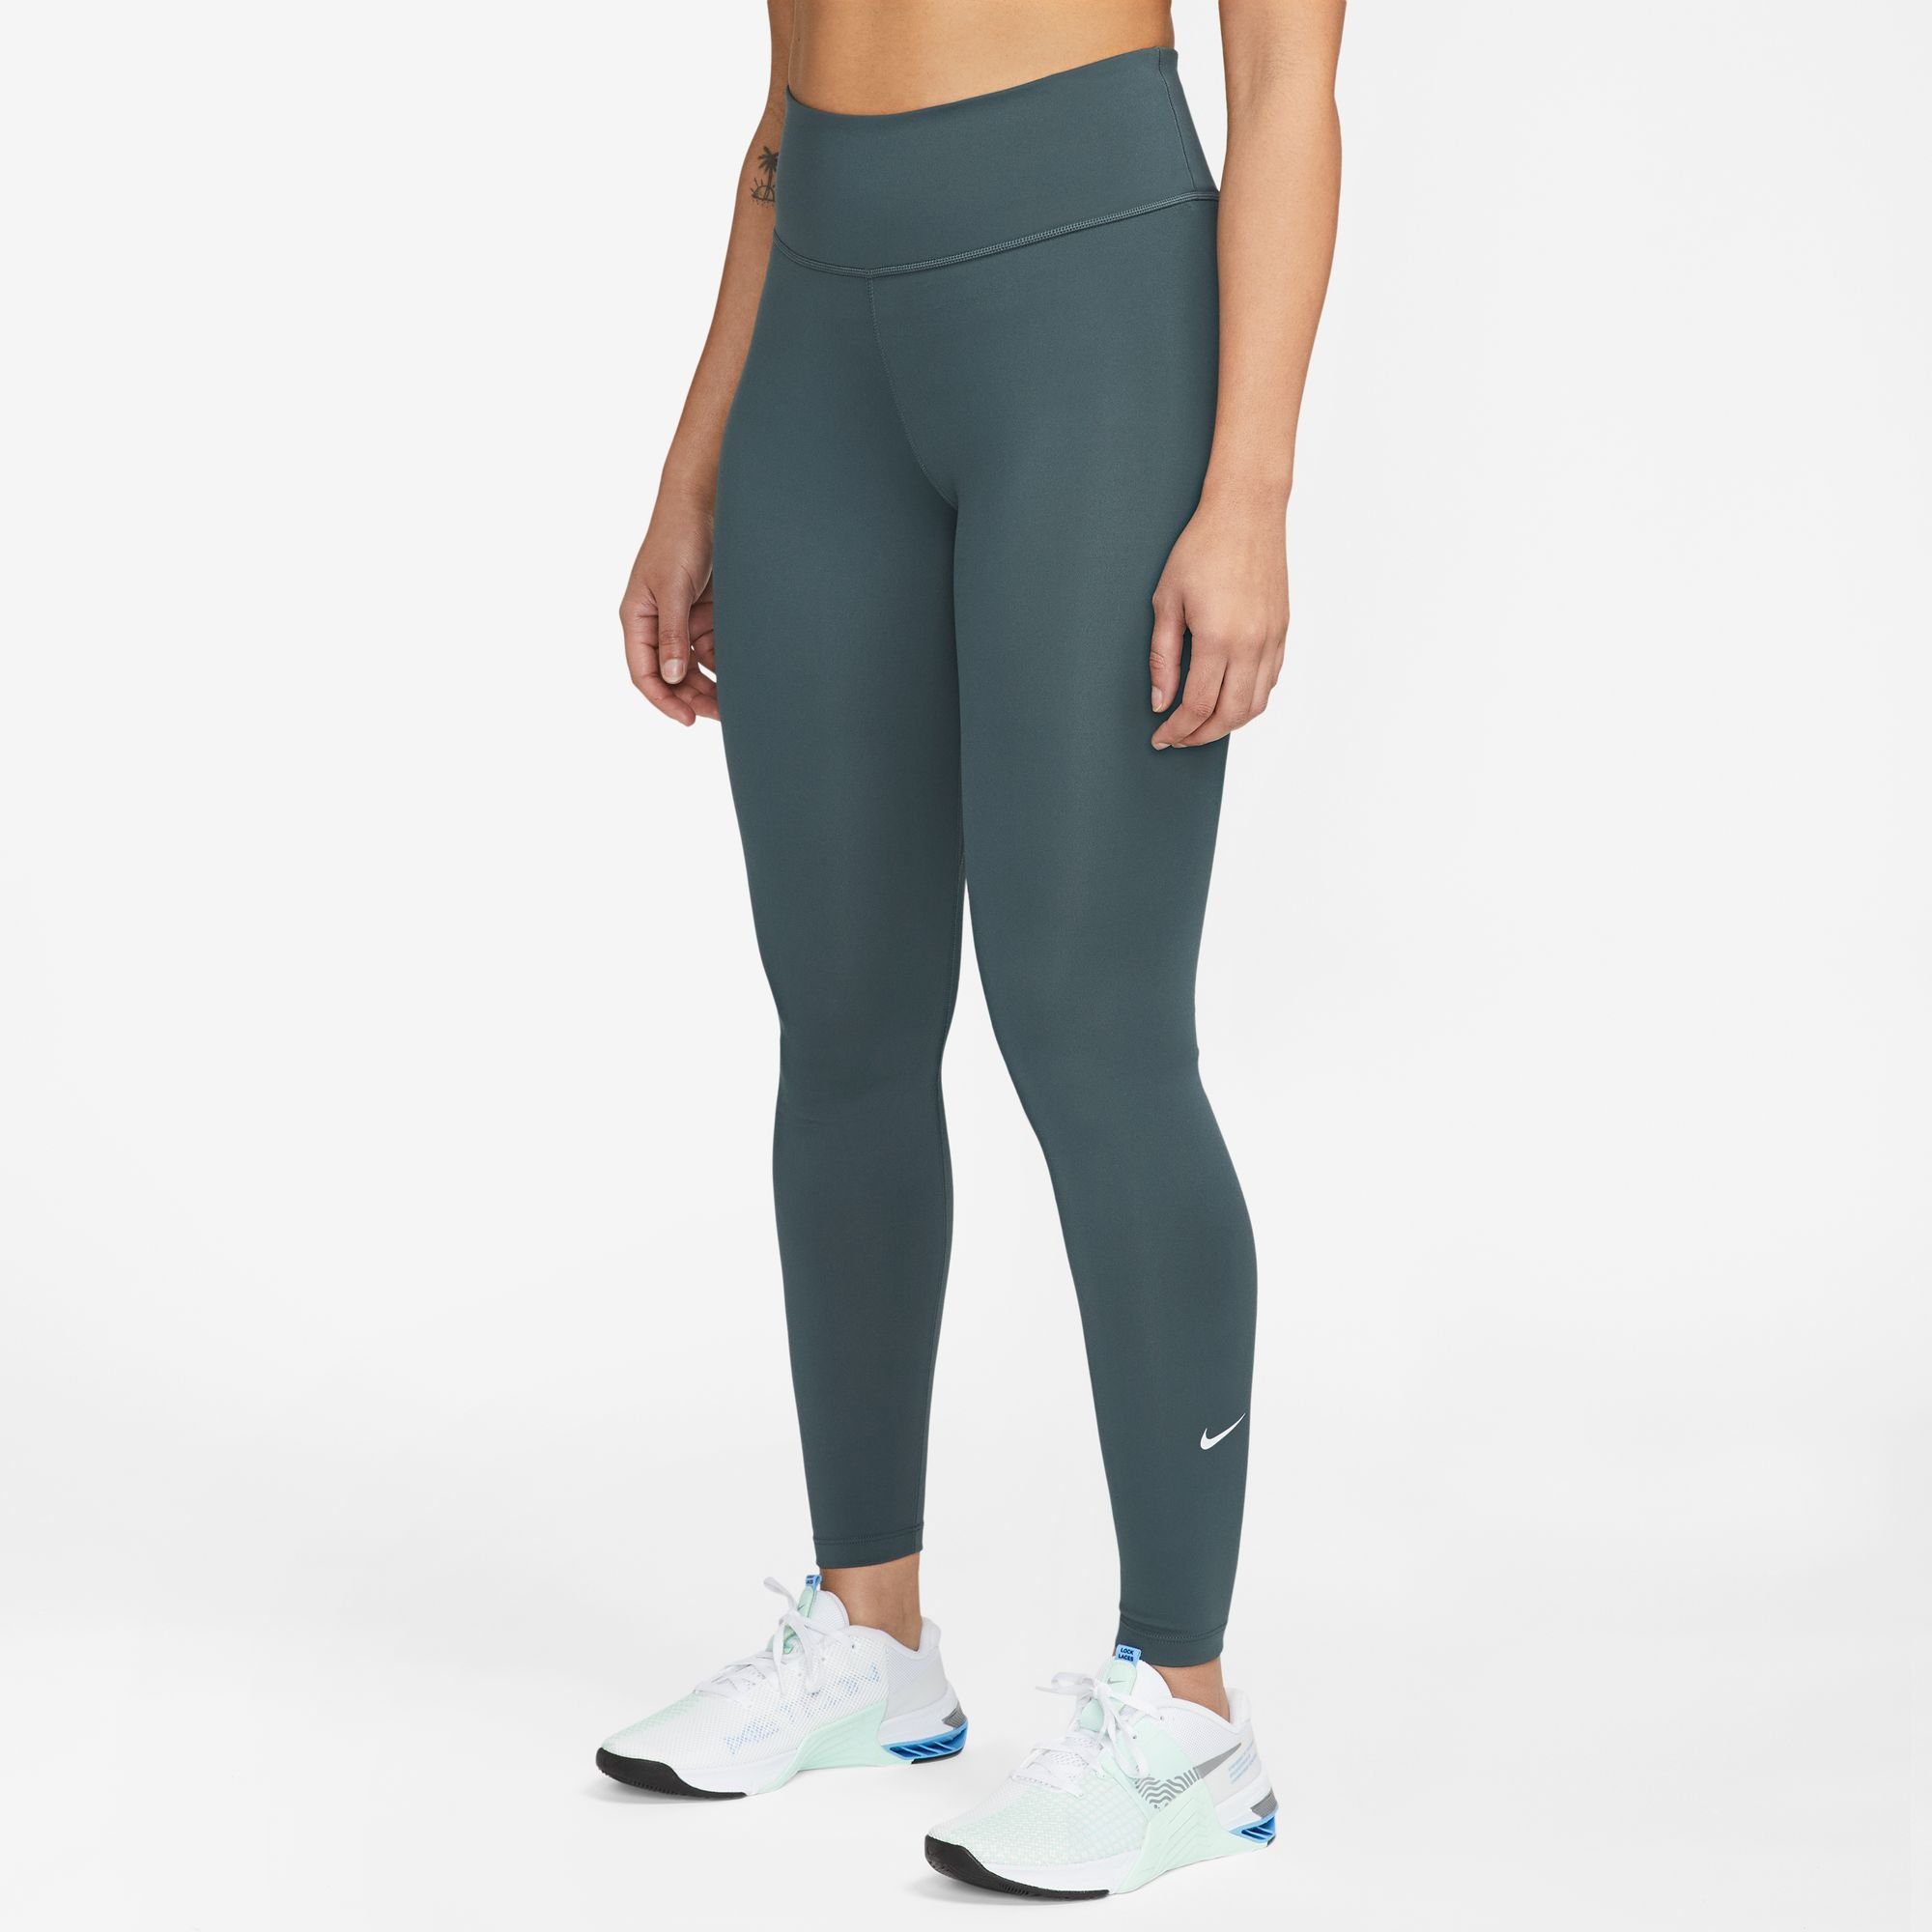 MID-RISE JUNGLE/WHITE Nike ONE LEGGINGS WOMEN'S Trainingstights DEEP